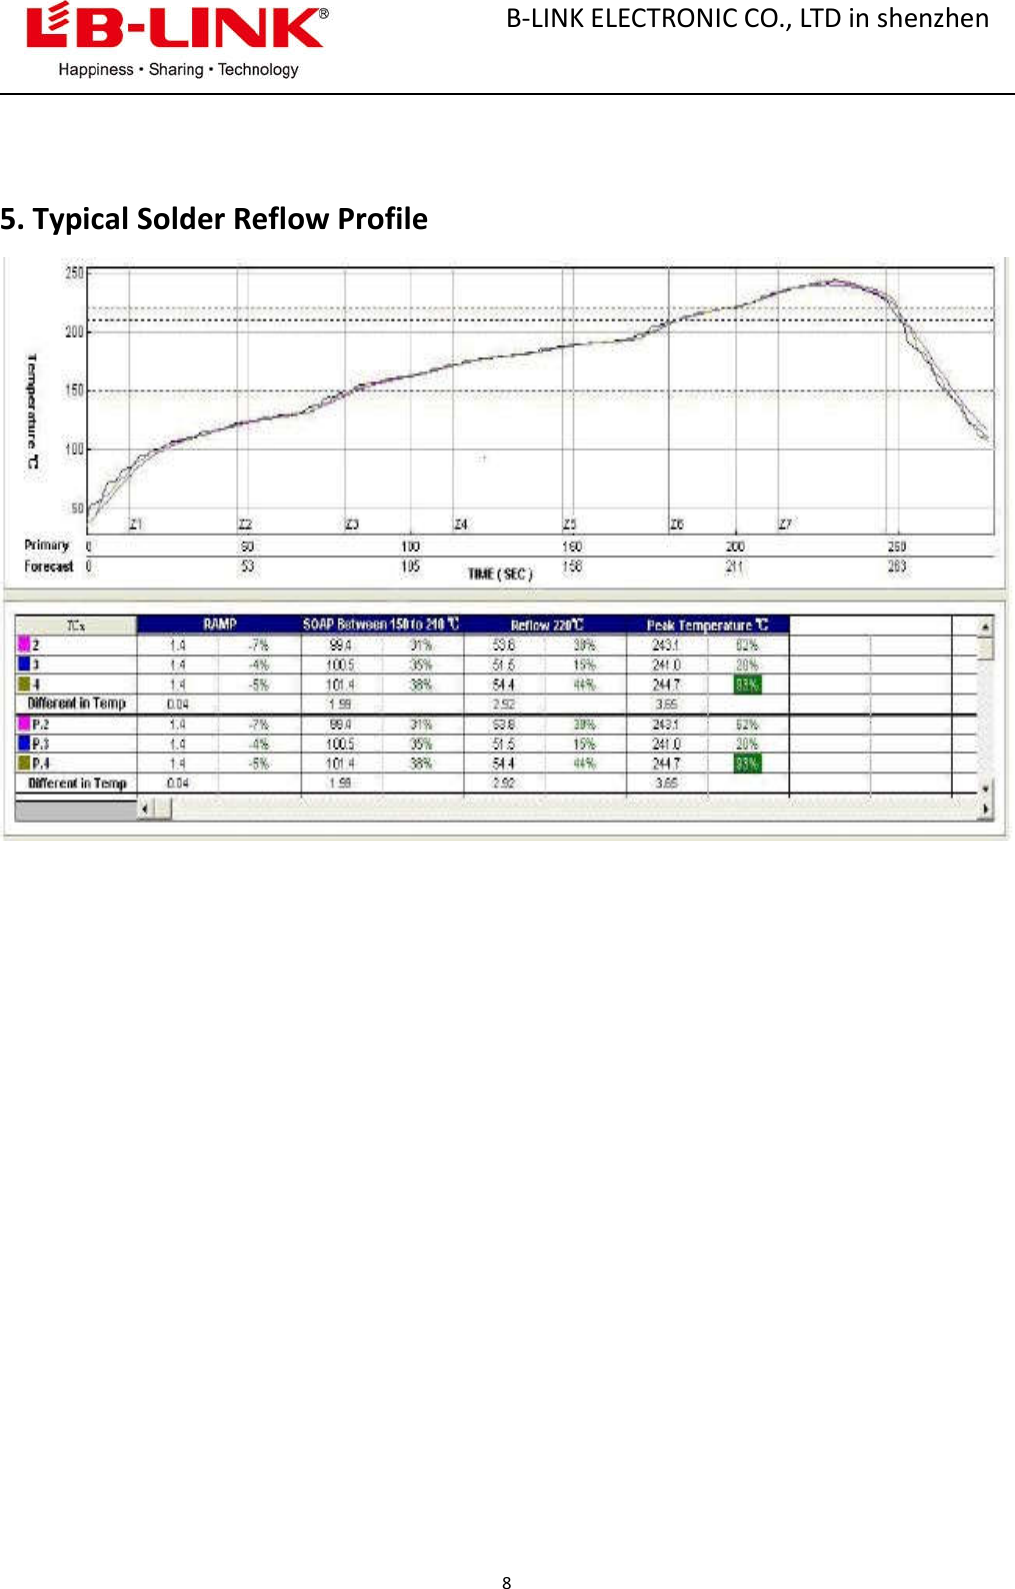 B-LINK ELECTRONIC CO., LTD in shenzhen85. Typical Solder Reflow Profile